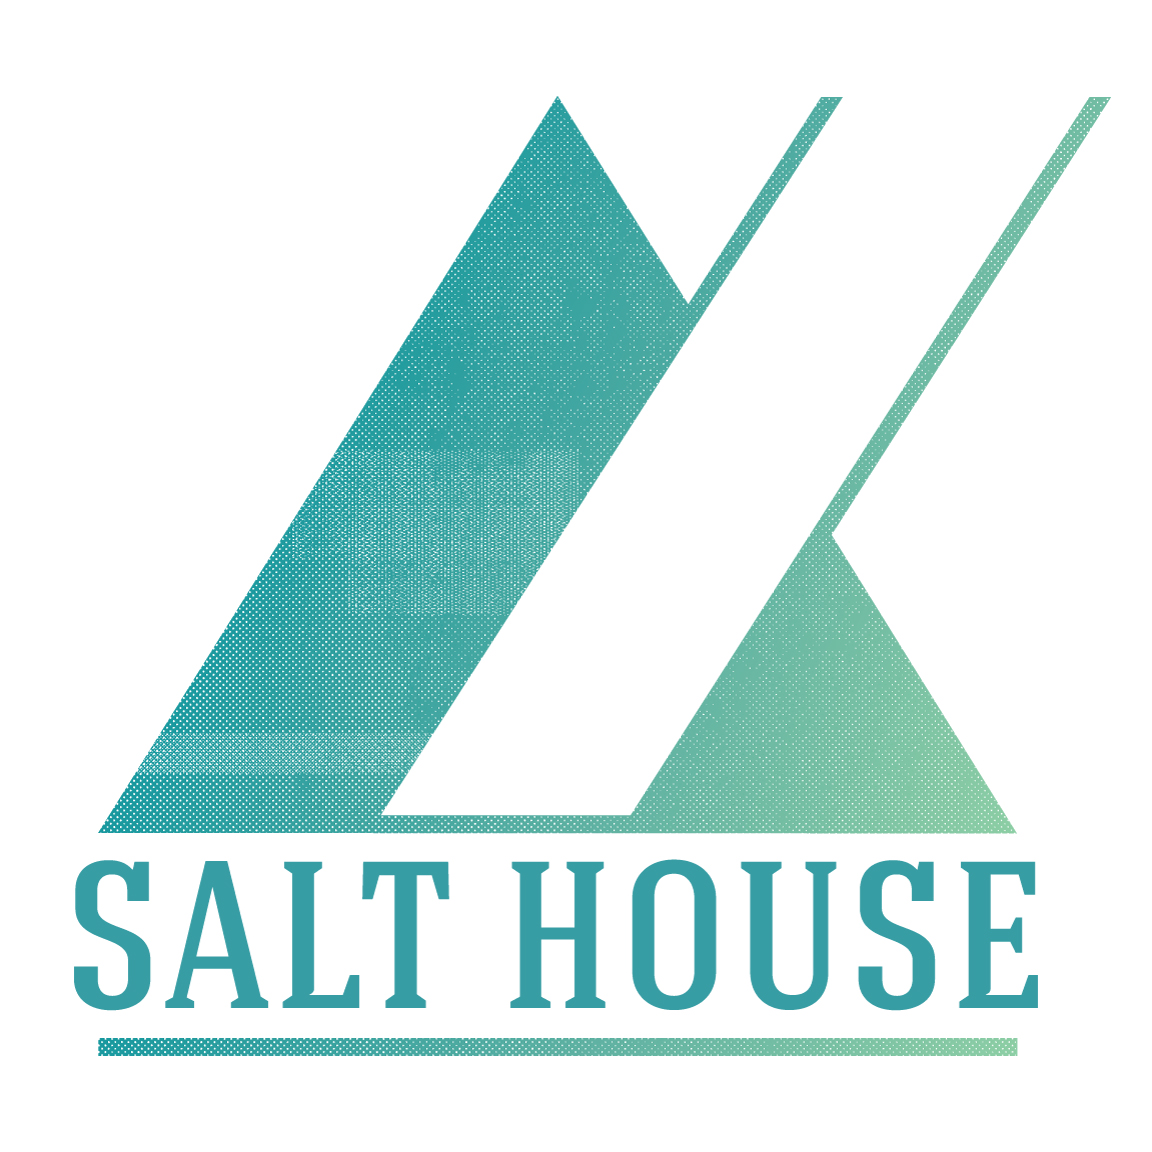 Salt House Image.jpg